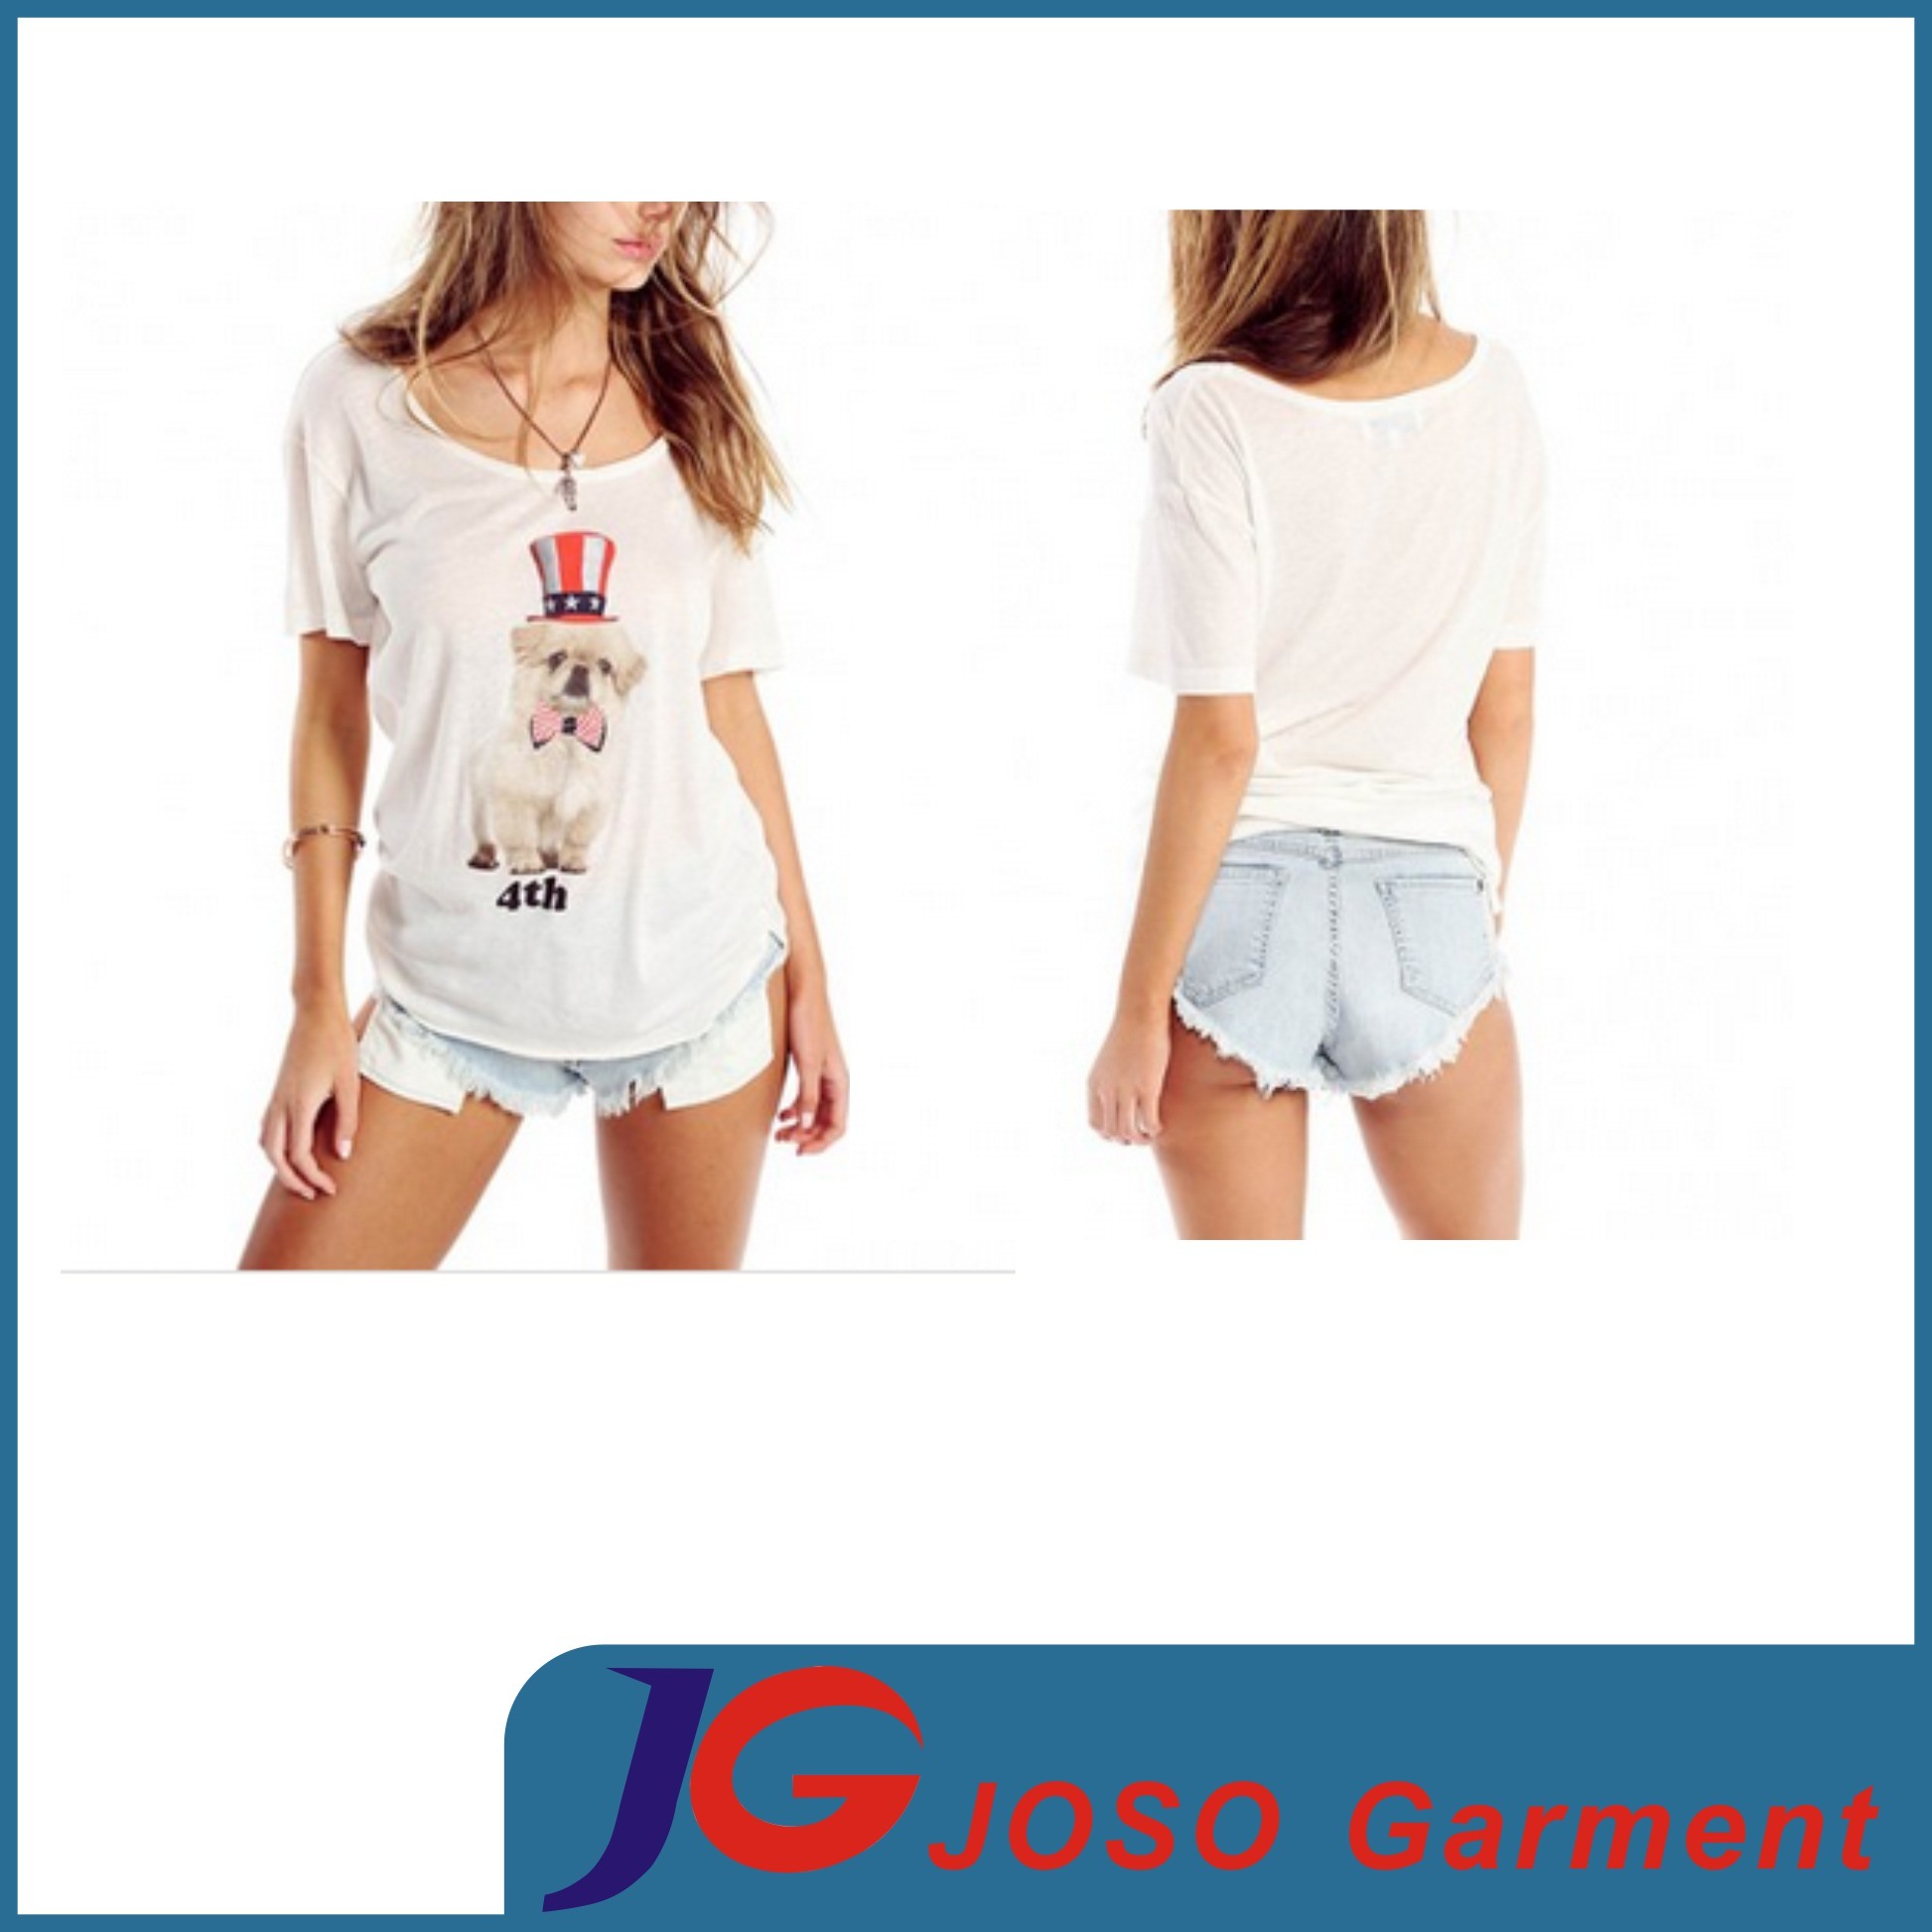 Lady Printing T Shirt Top Loose Comfortable Cotton Clothing (JS9015)